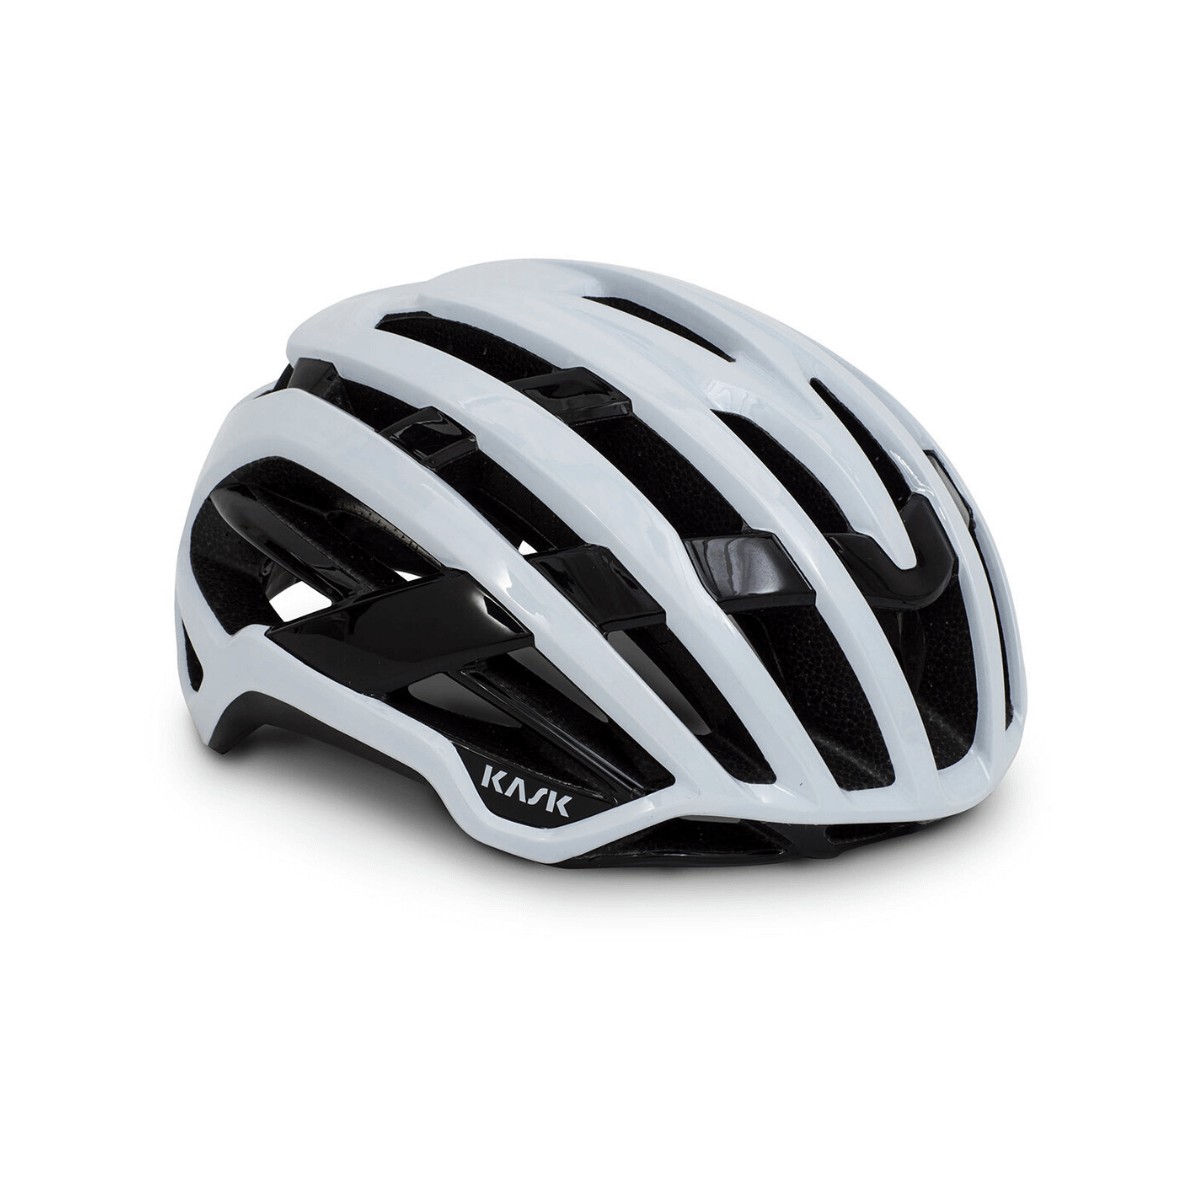 Kask Valegro White Helmet, Size L